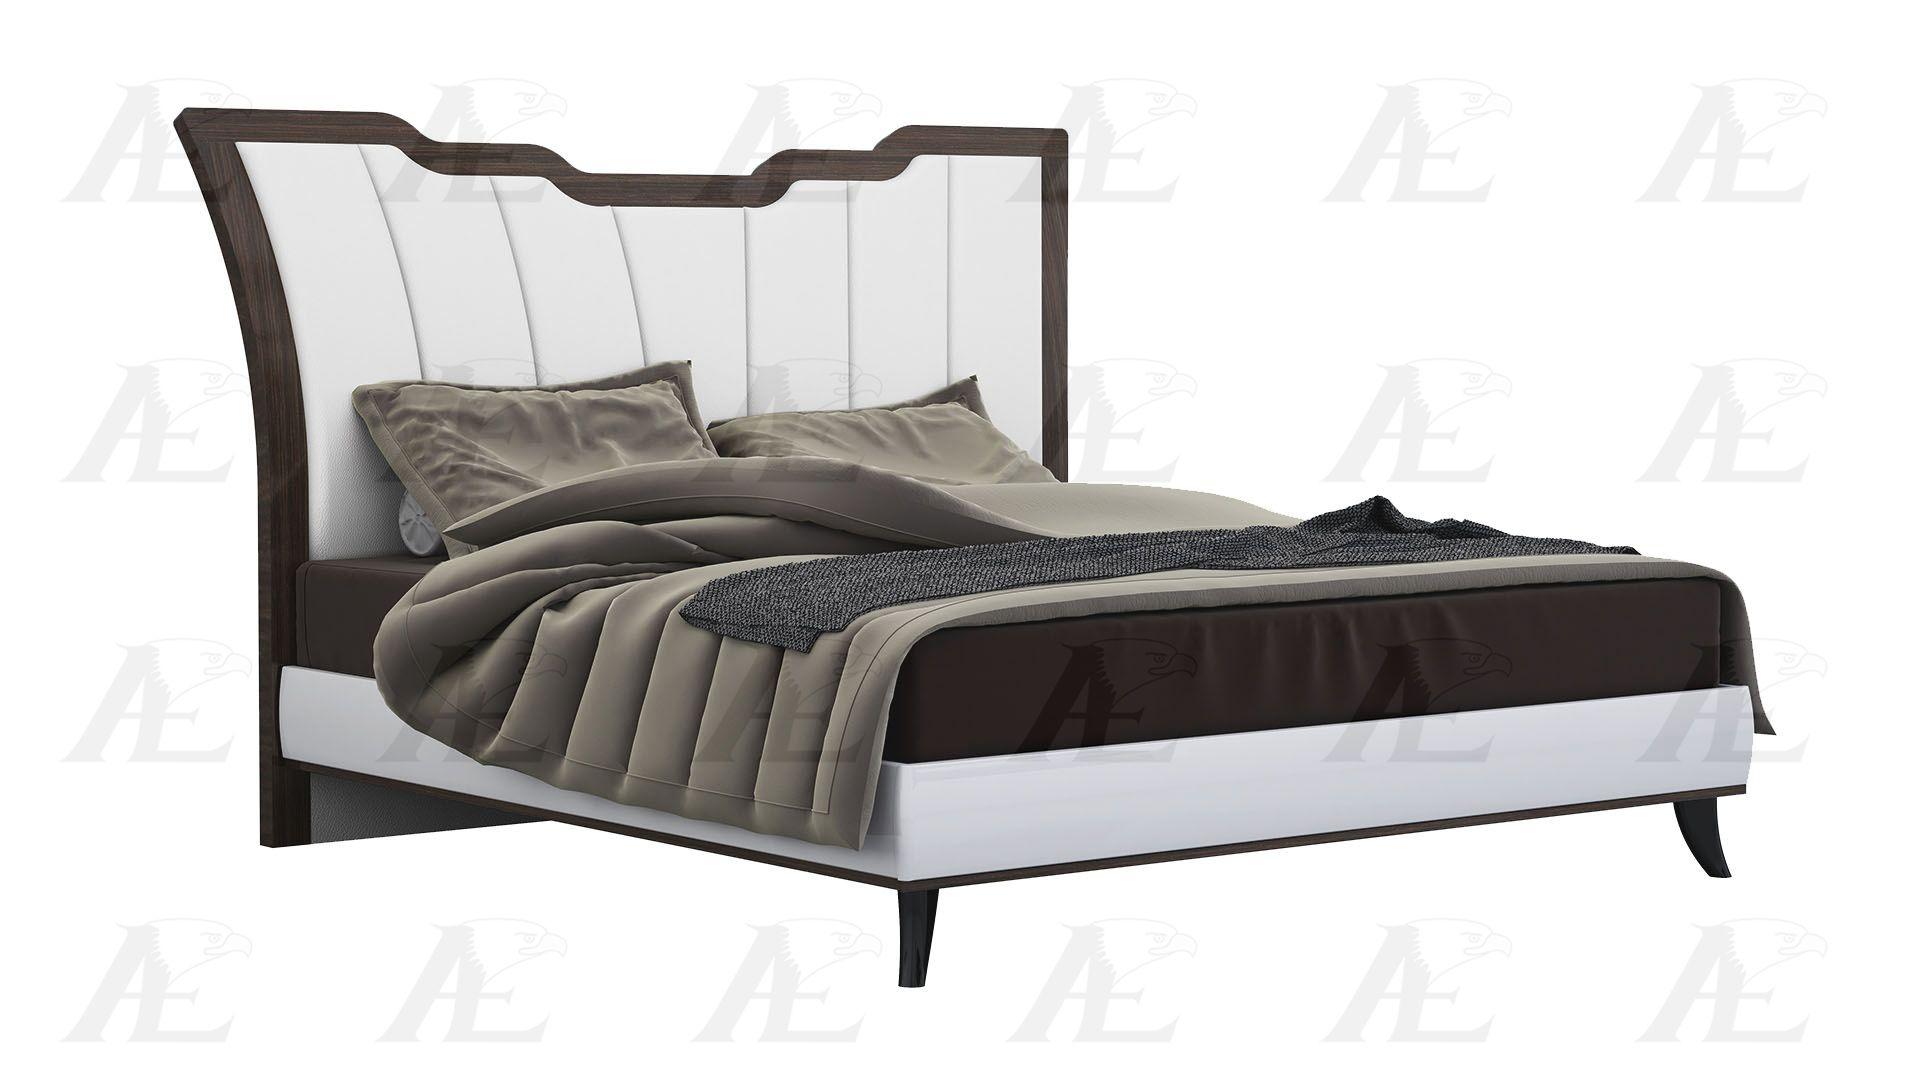 

    
American Eagle Furniture B-P105 Palisander Brown White Finish Eastern King Size Bed Wood Modern
